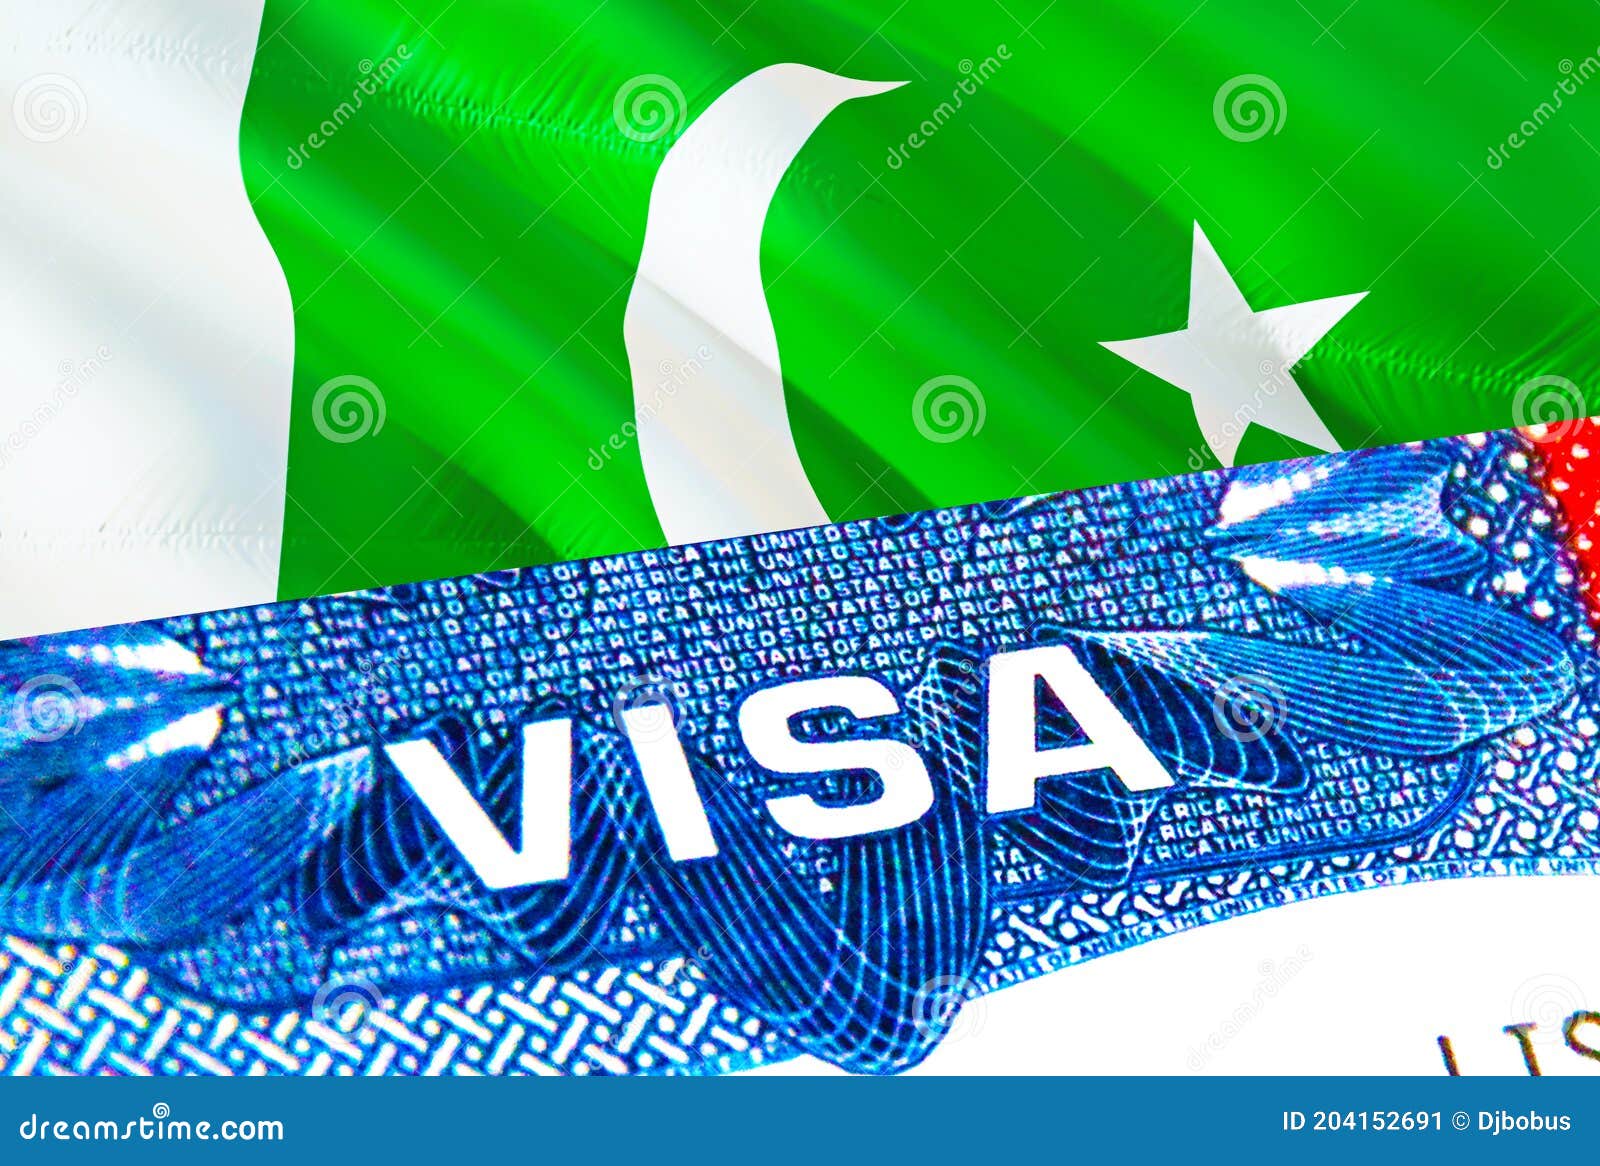 Pakistan Visa. Travel to Pakistan focusing on word VISA, 3D rendering. Pakistan immigrate concept with visa in passport. Pakistan tourism entrance in passport. Visa USA stamp citizenship. USA